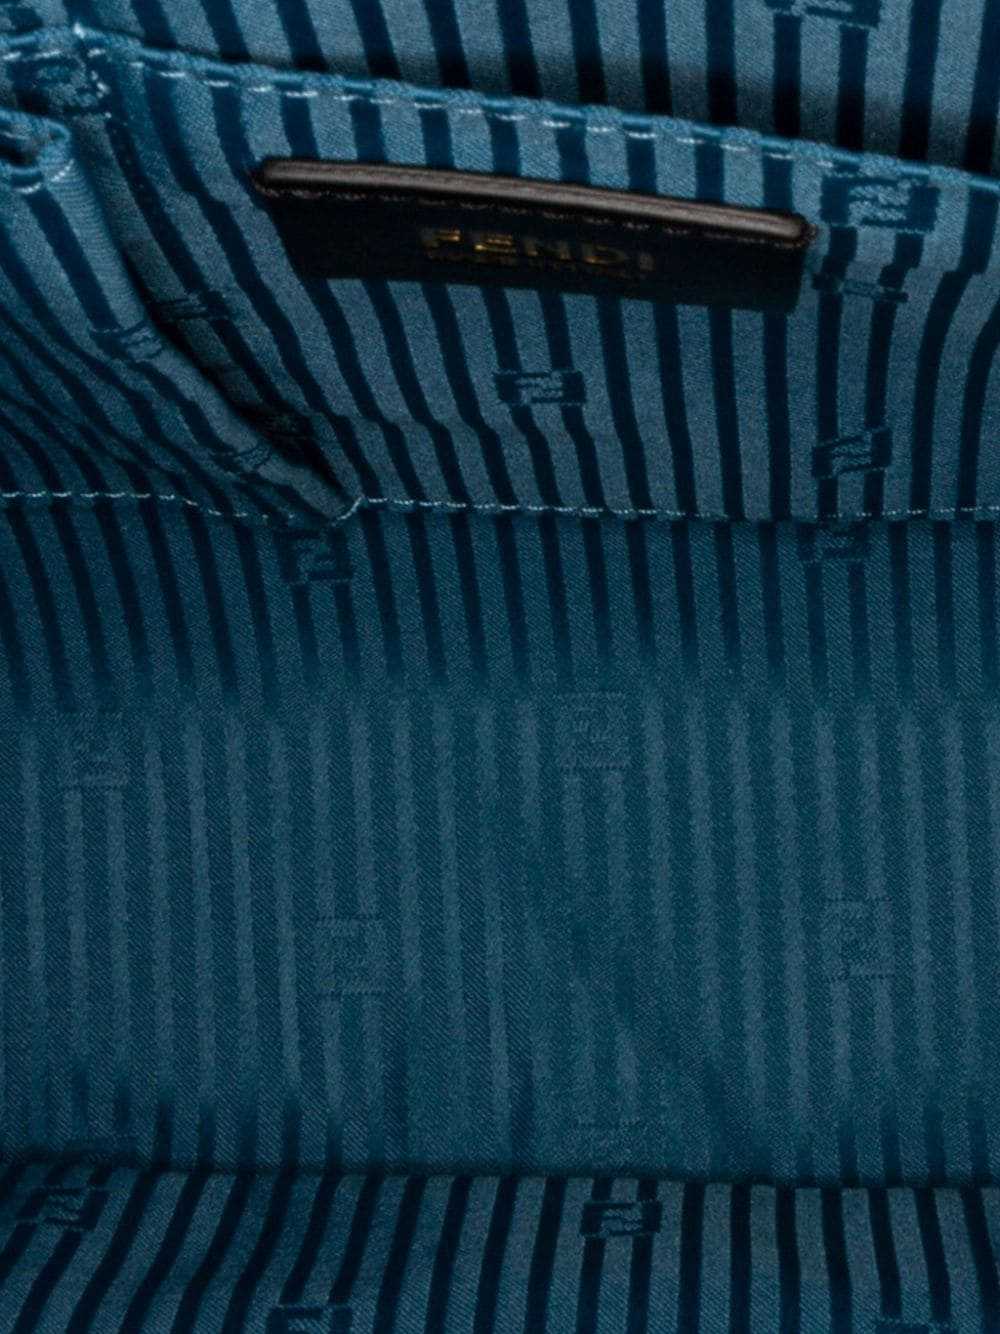 Fendi Pre-Owned 2Jours satchel - Blue - image 5